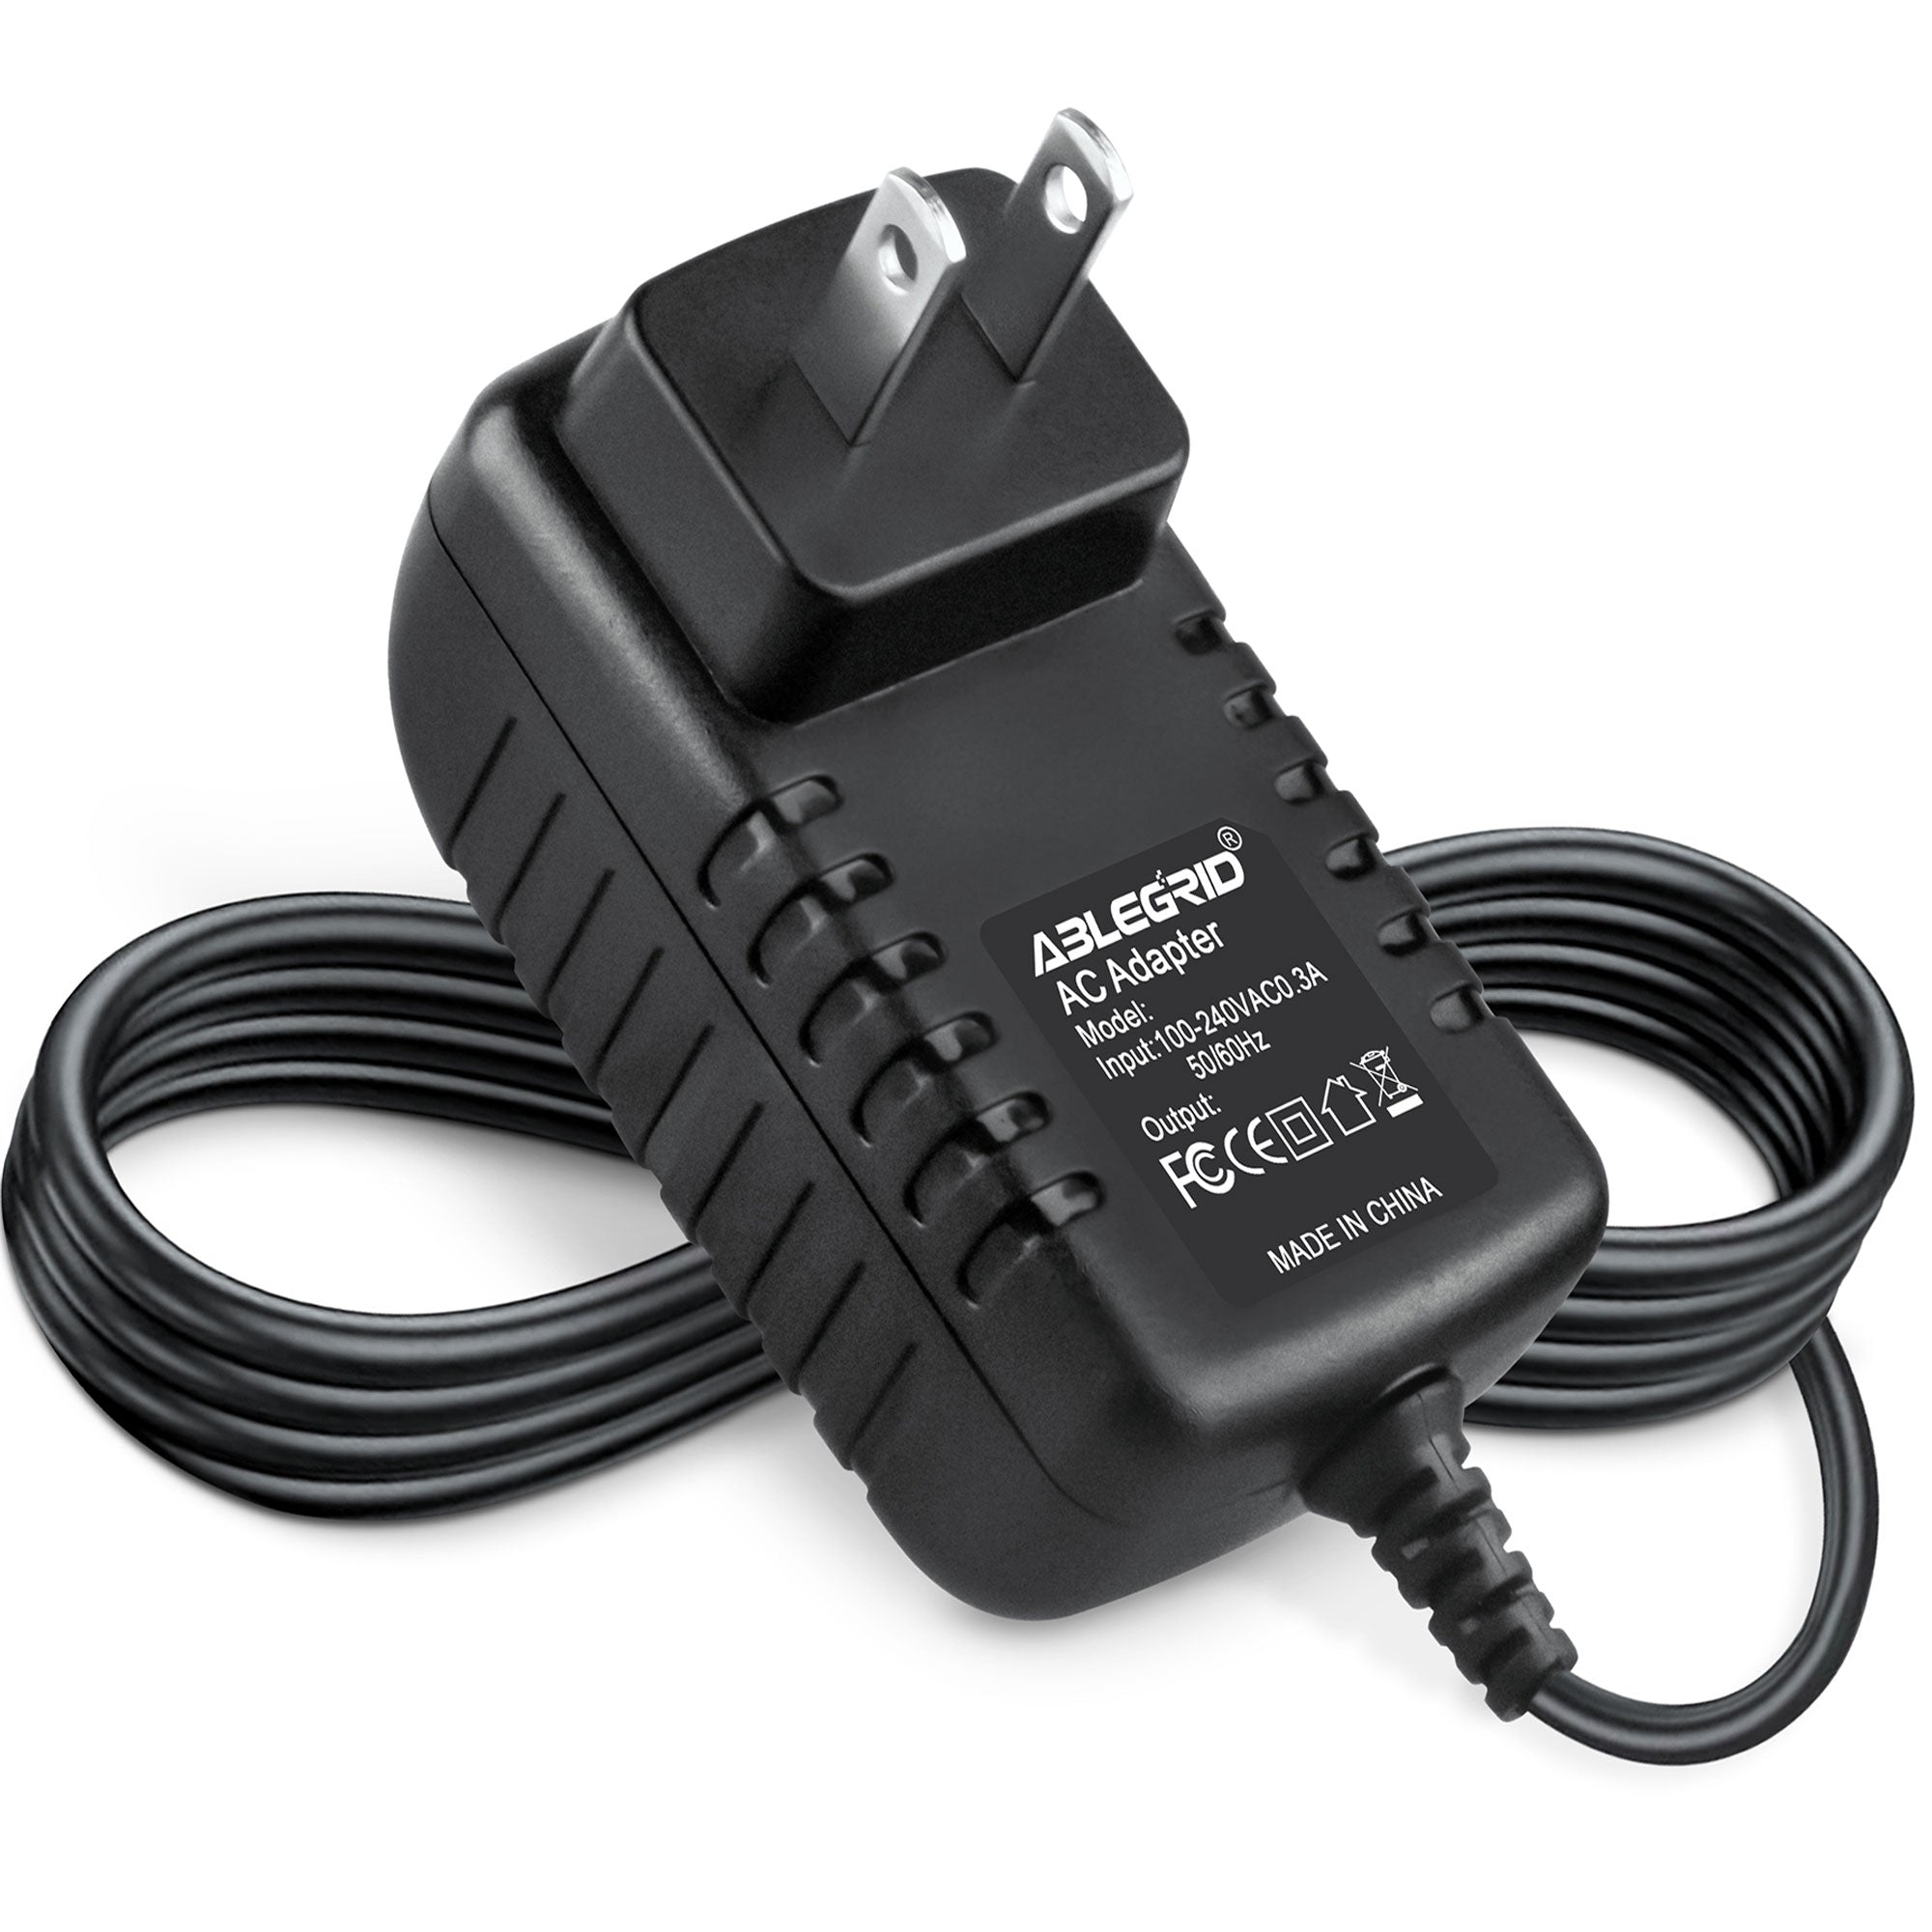 AbleGrid AC Adapter for Model SK01G-0500150B SK02G-0500200S SK01G-0500120U SK01G-0500120V SK01G-0500120B SK01G-0500120J Charger Power Supply Cord PSU